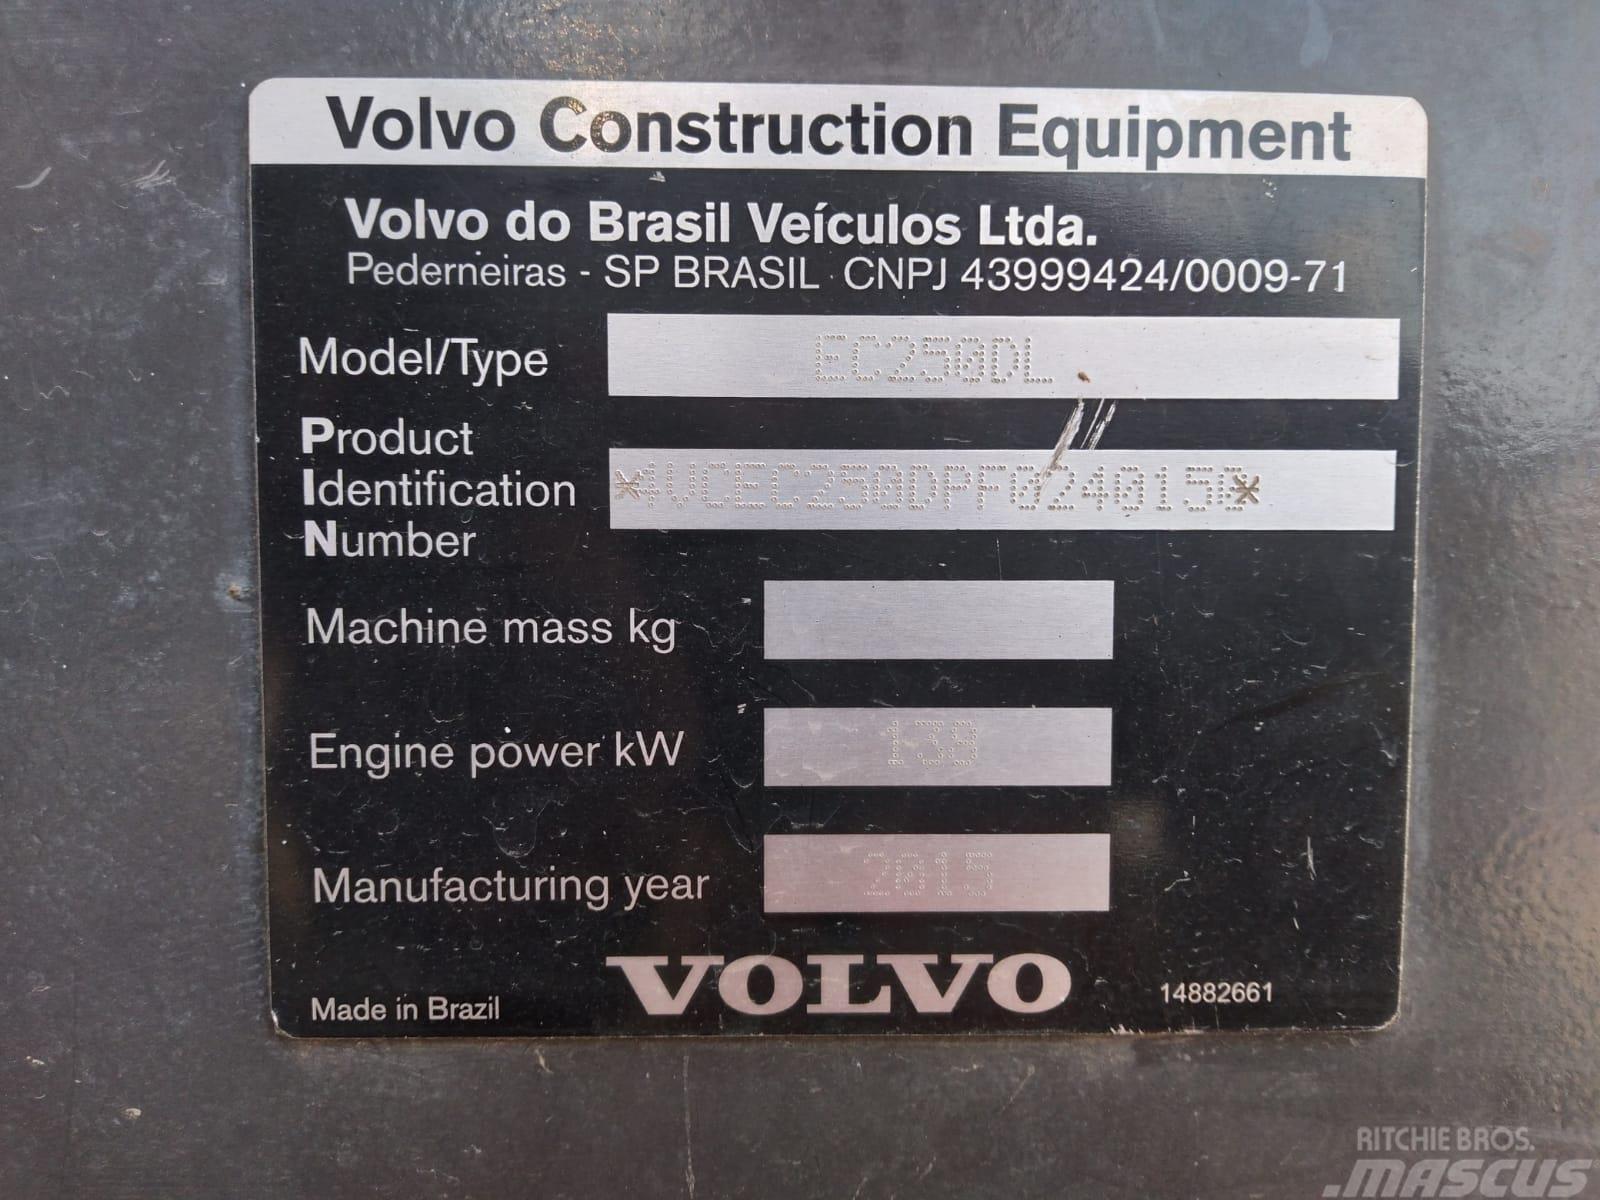 Volvo EC 250 D L Telakaivukoneet